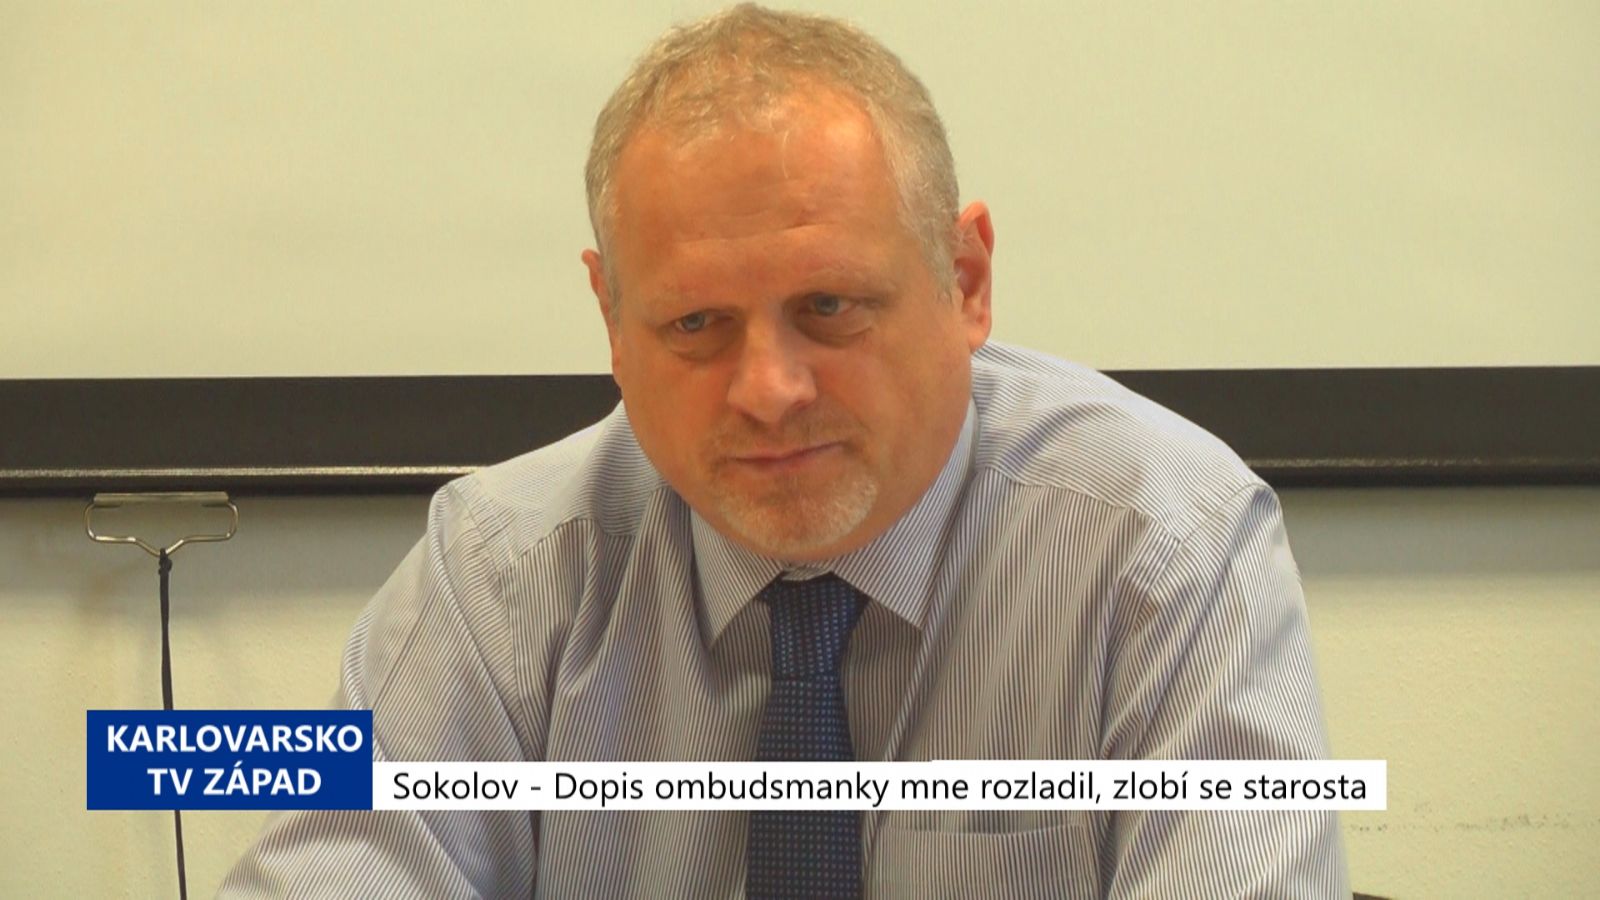 Sokolov: Dopis ombudsmanky mne rozladil, zlobí se starosta (TV Západ)